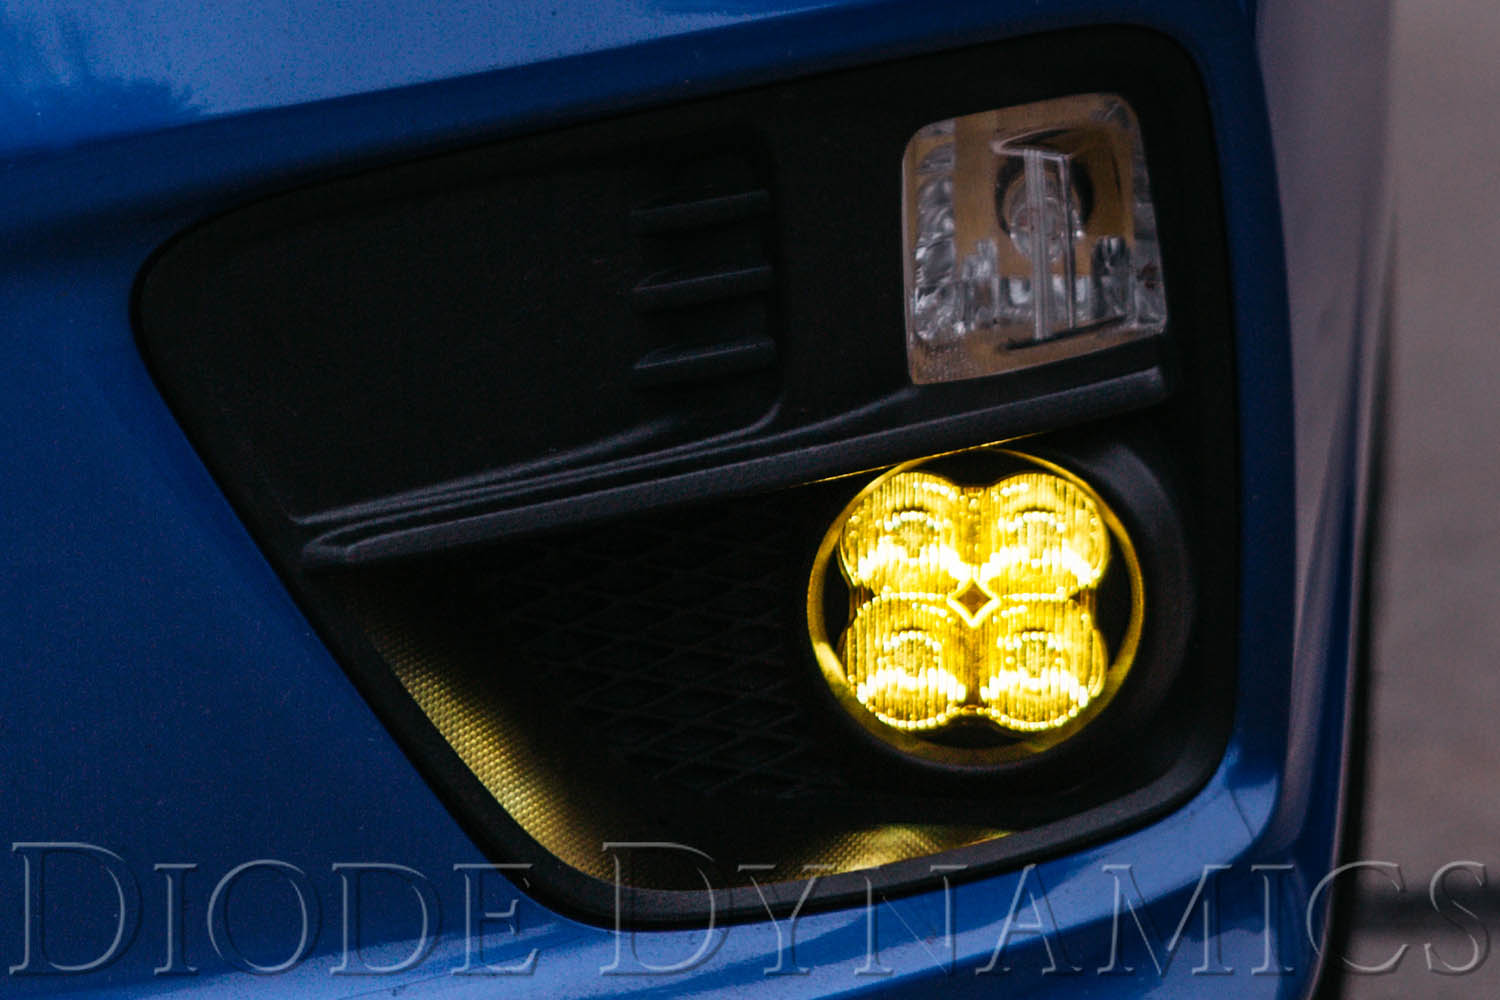 SS3 LED Fog Light Kit for 2005-2007 Ford Freestyle Yellow SAE Fog Sport Diode Dynamics